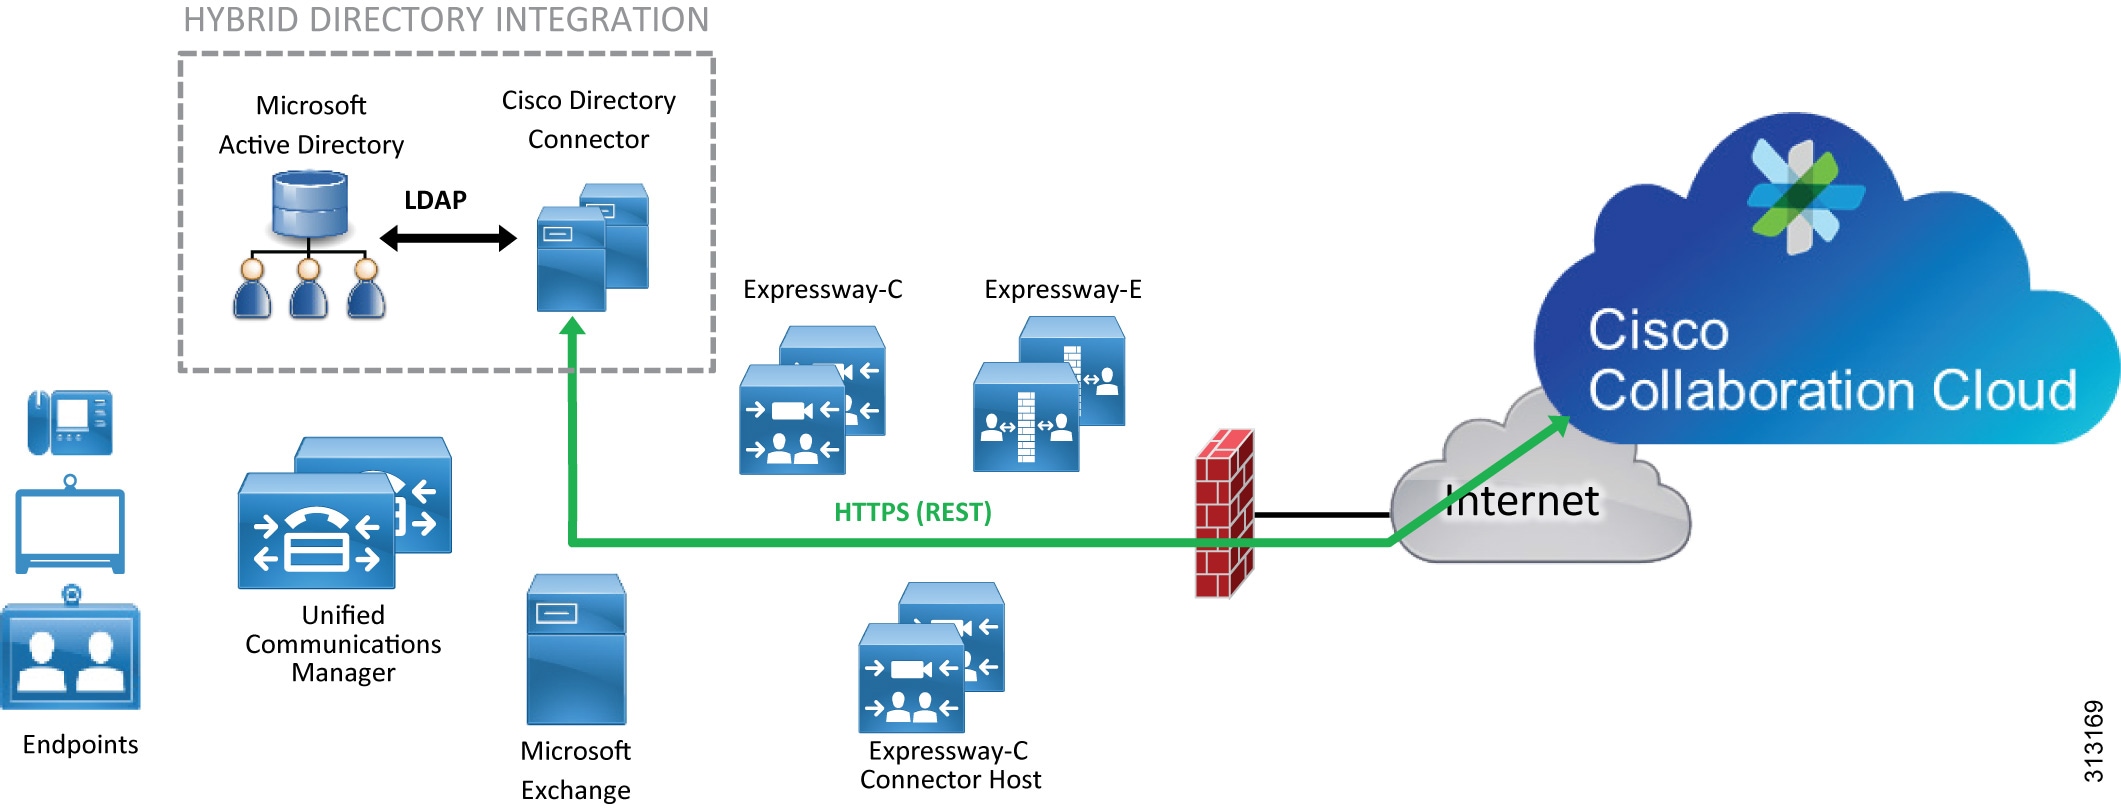 Preferred Architecture for Cisco Spark Hybrid Services, Design Overview